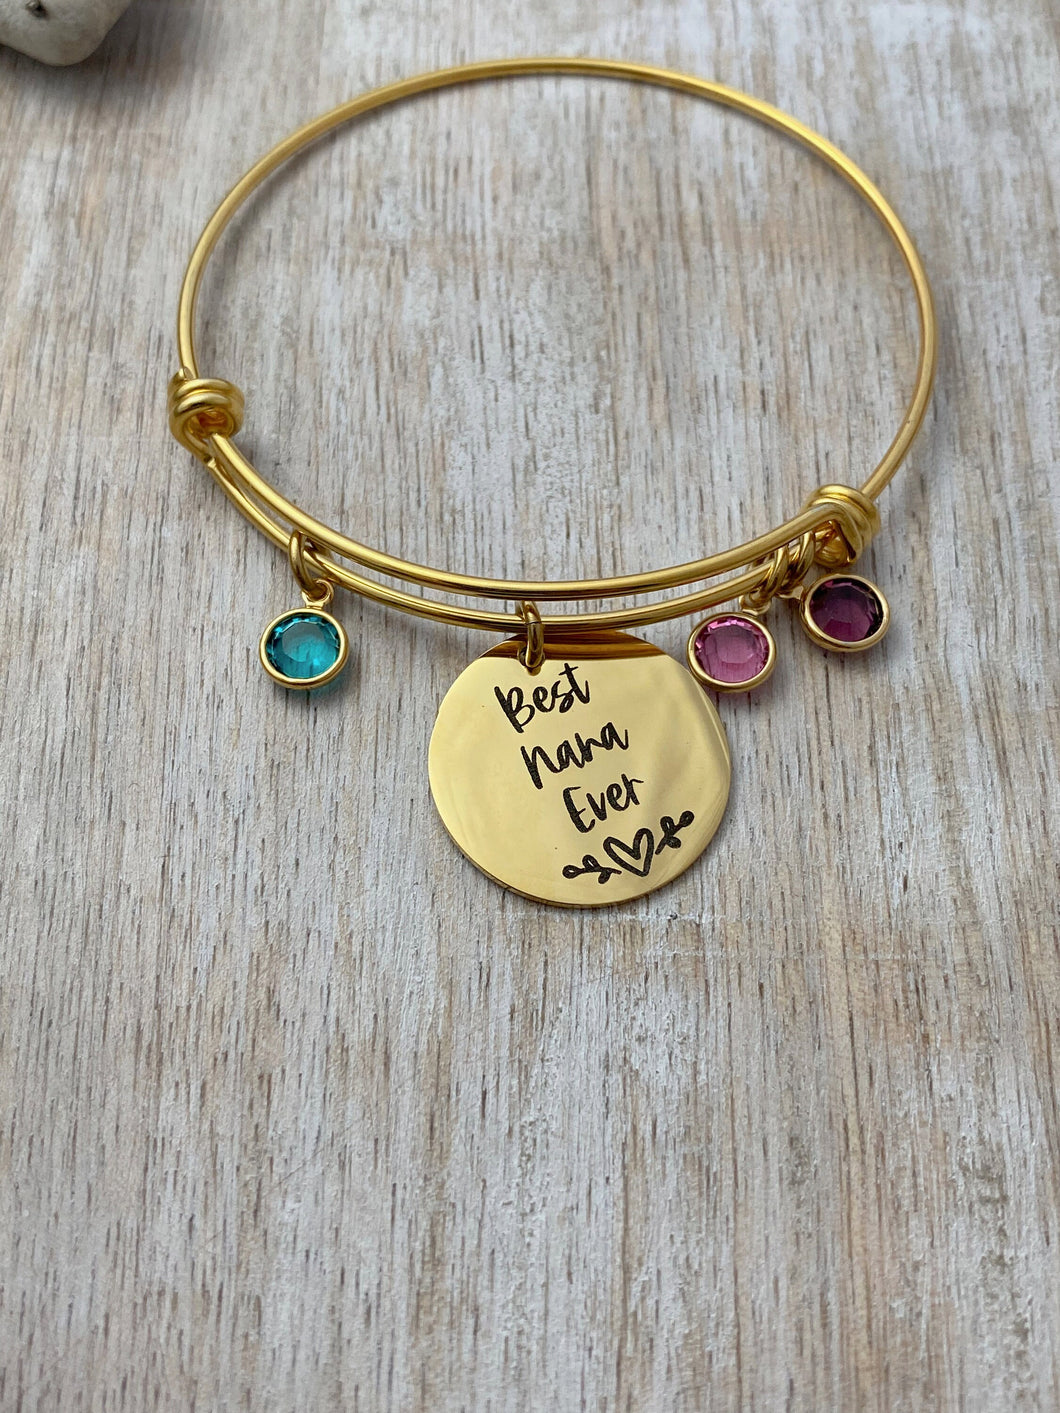 Best Mom Ever bracelet - Personalized with any name  Swarovski crystal birthstones rose gold, gold or silver stainless steel bangle bracelet